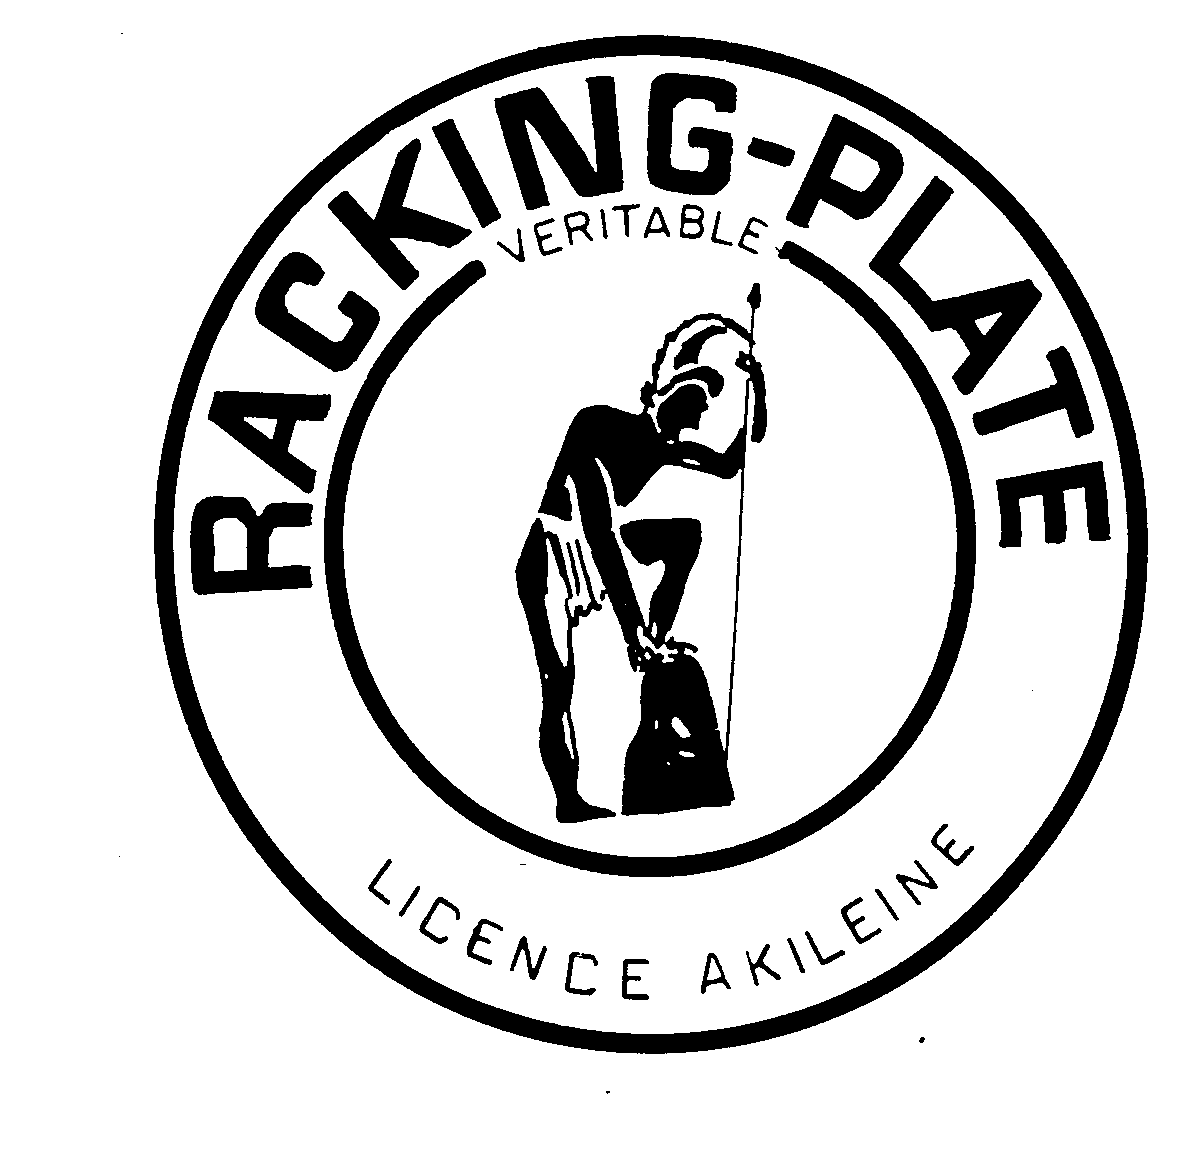  RACKING-PLATE VERITABLE LICENCE AKILEINE